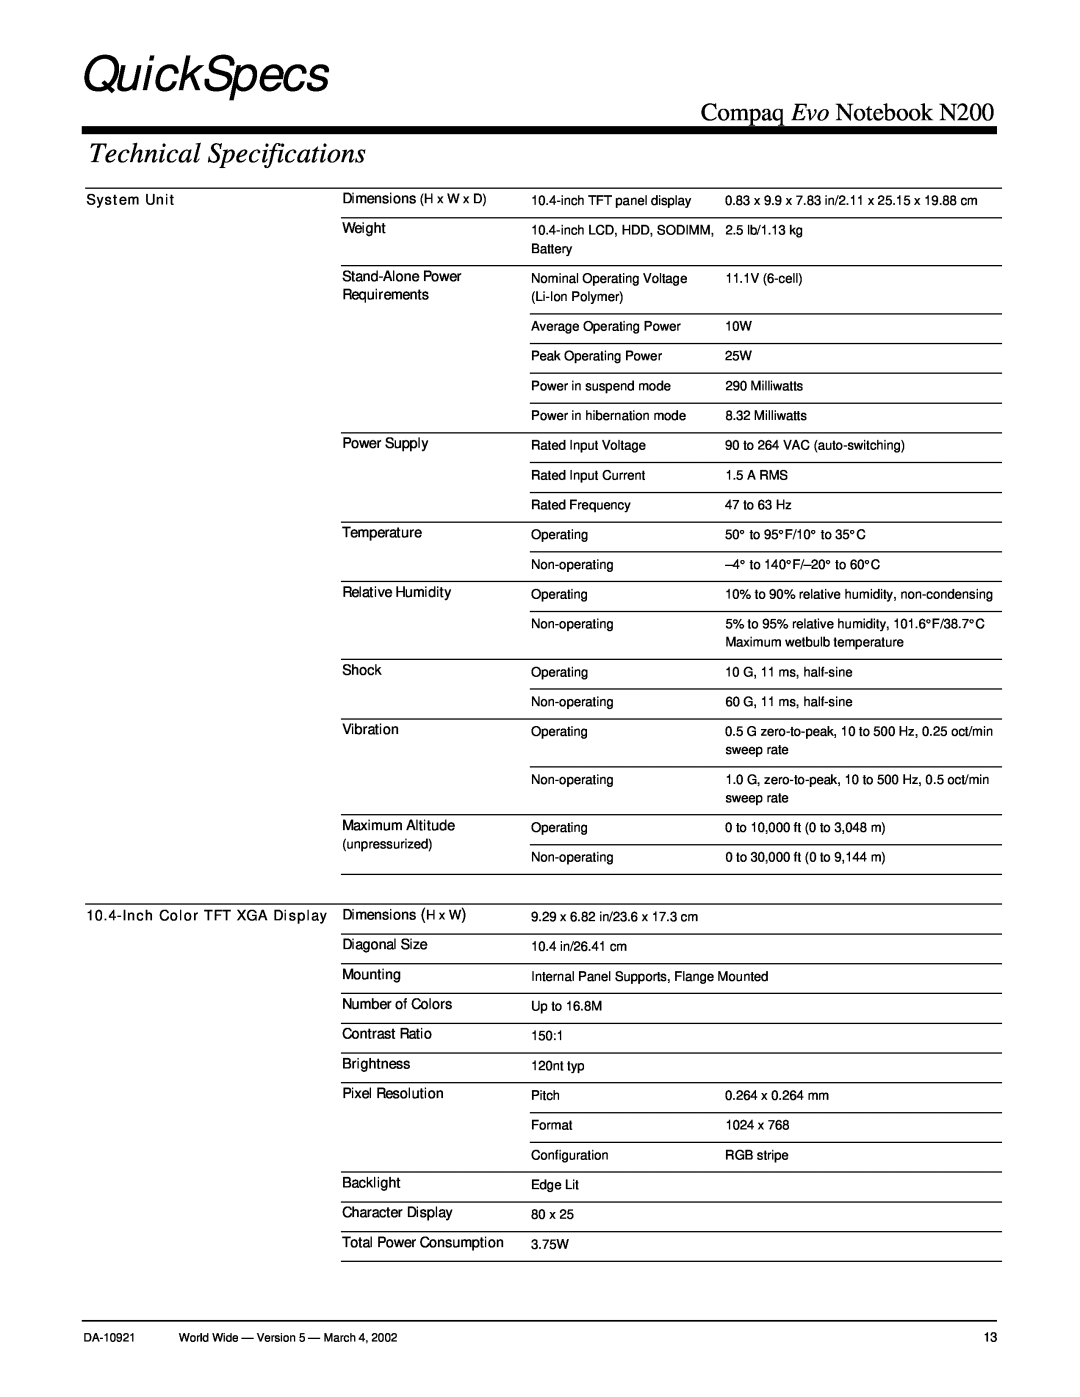 Compaq warranty Technical Specifications, QuickSpecs, Compaq Evo Notebook N200 